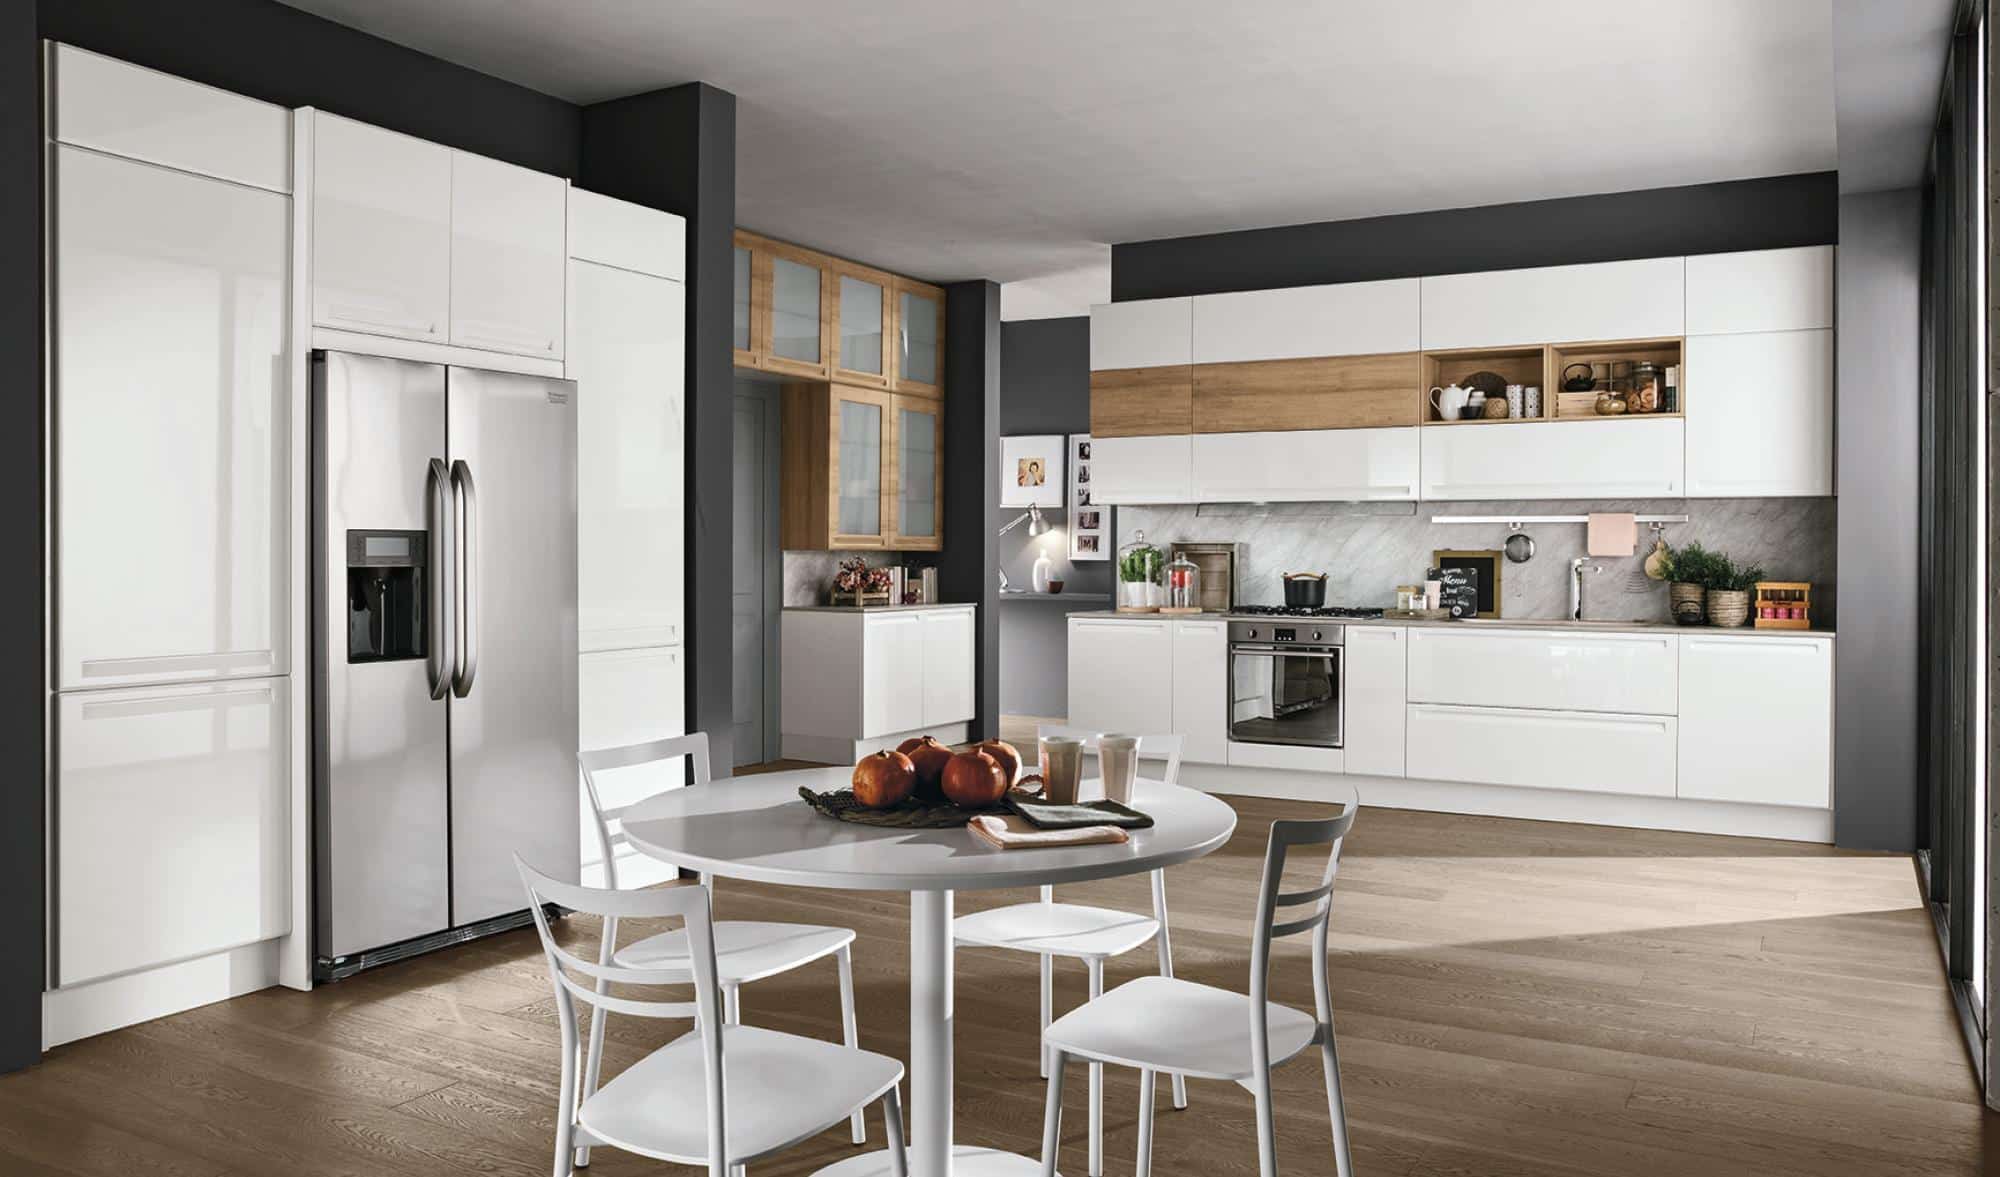 Isla κουζινα λευκό και φυσικο χρωματισμο πολυμερικο με ενσωματωμενη λαβη και ρετρο υφος